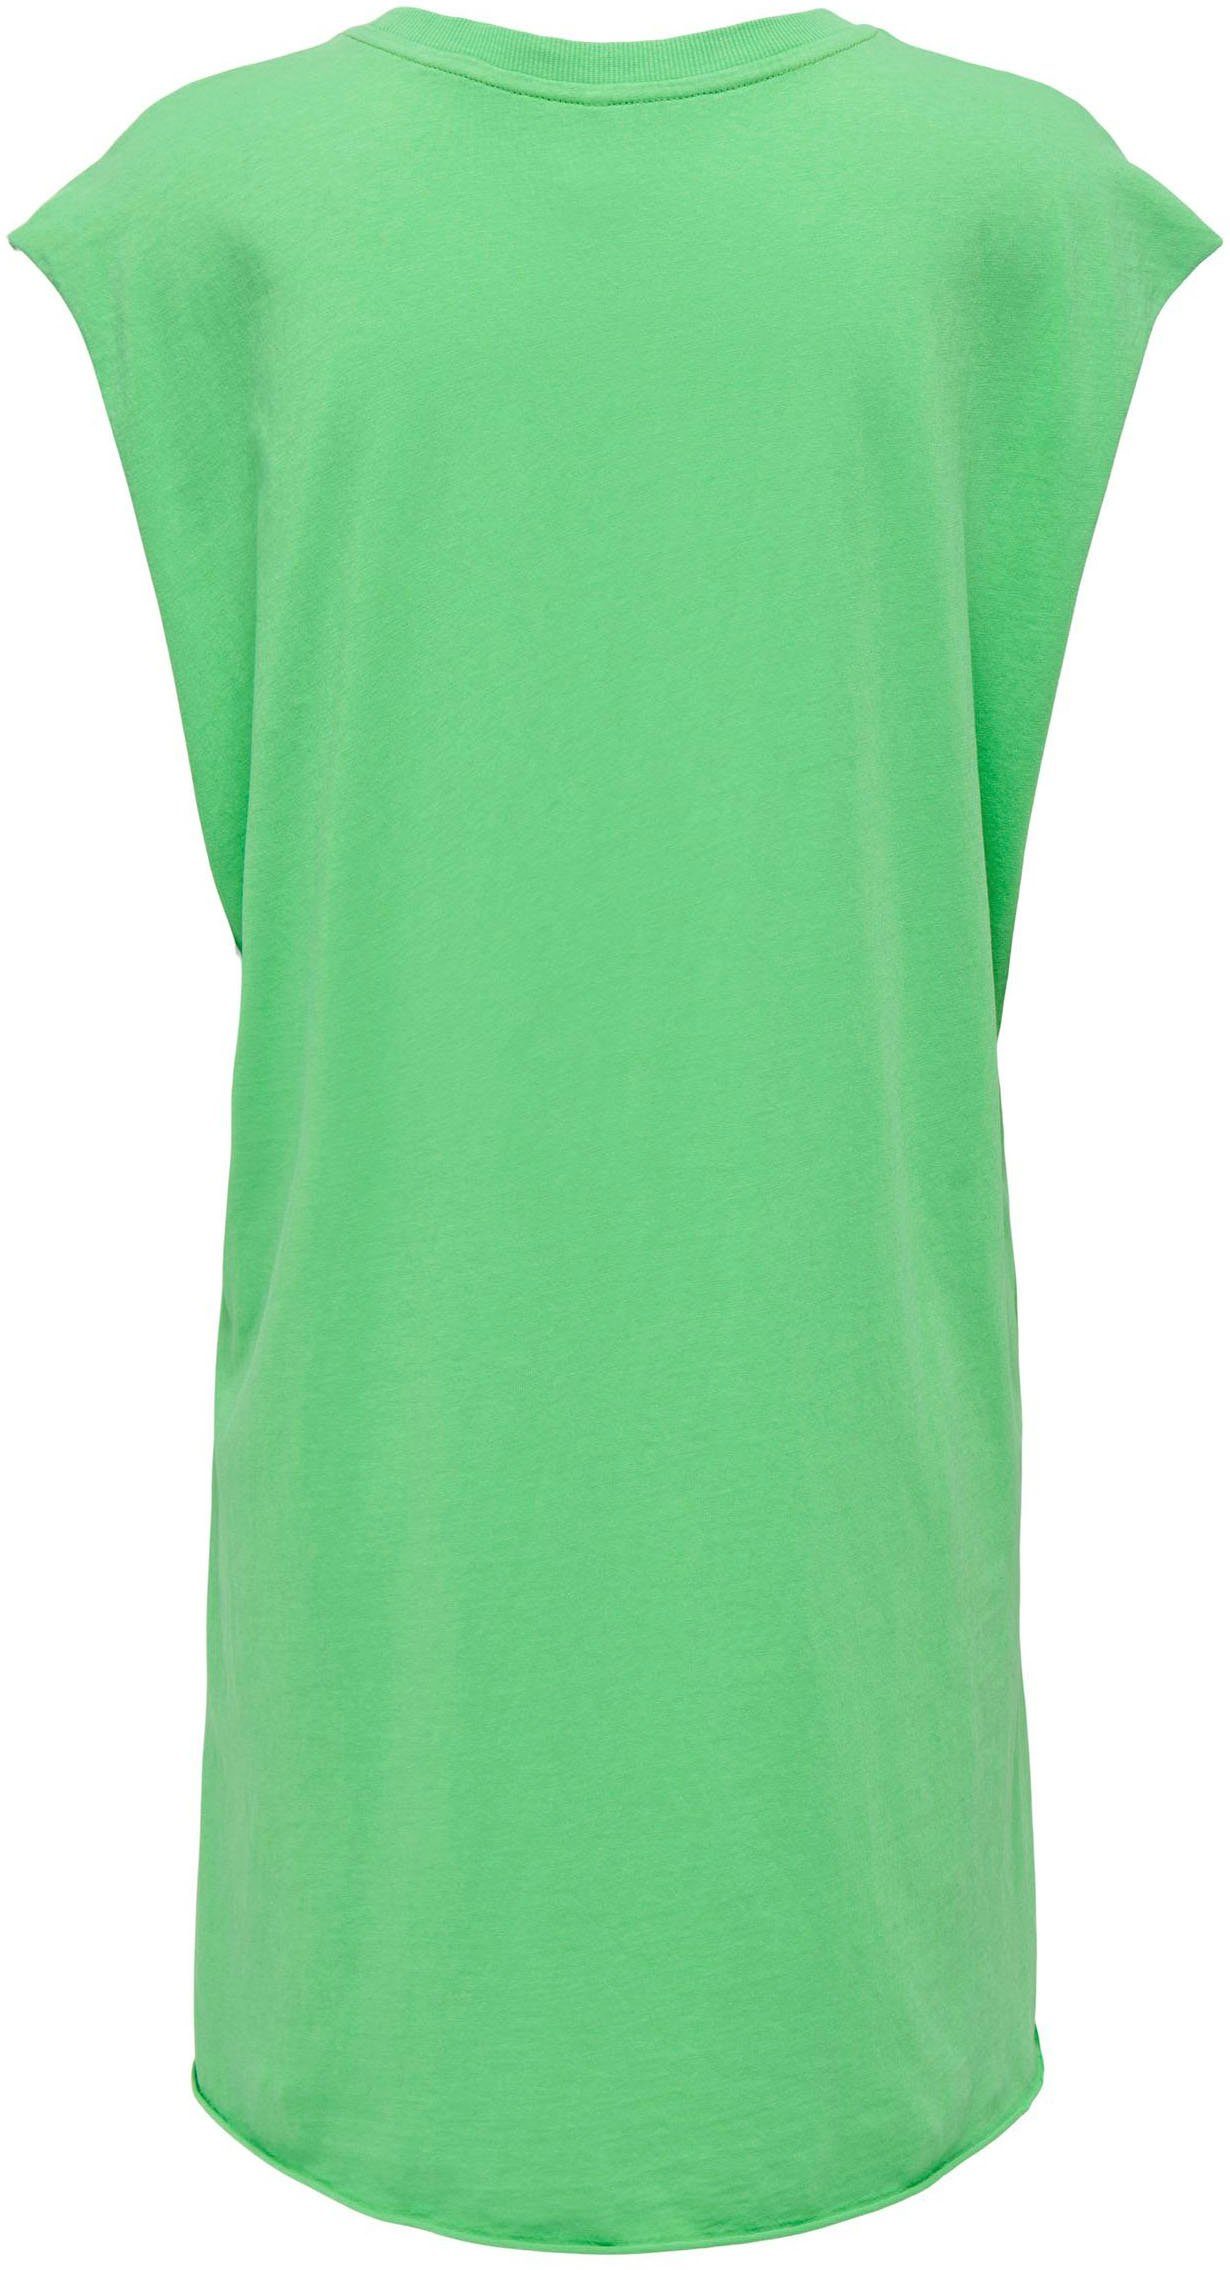 ONLLUCY PALMS Print:Sunset Shirtkleid DRESS Green ONLY BOX Vibrant S/L JRS